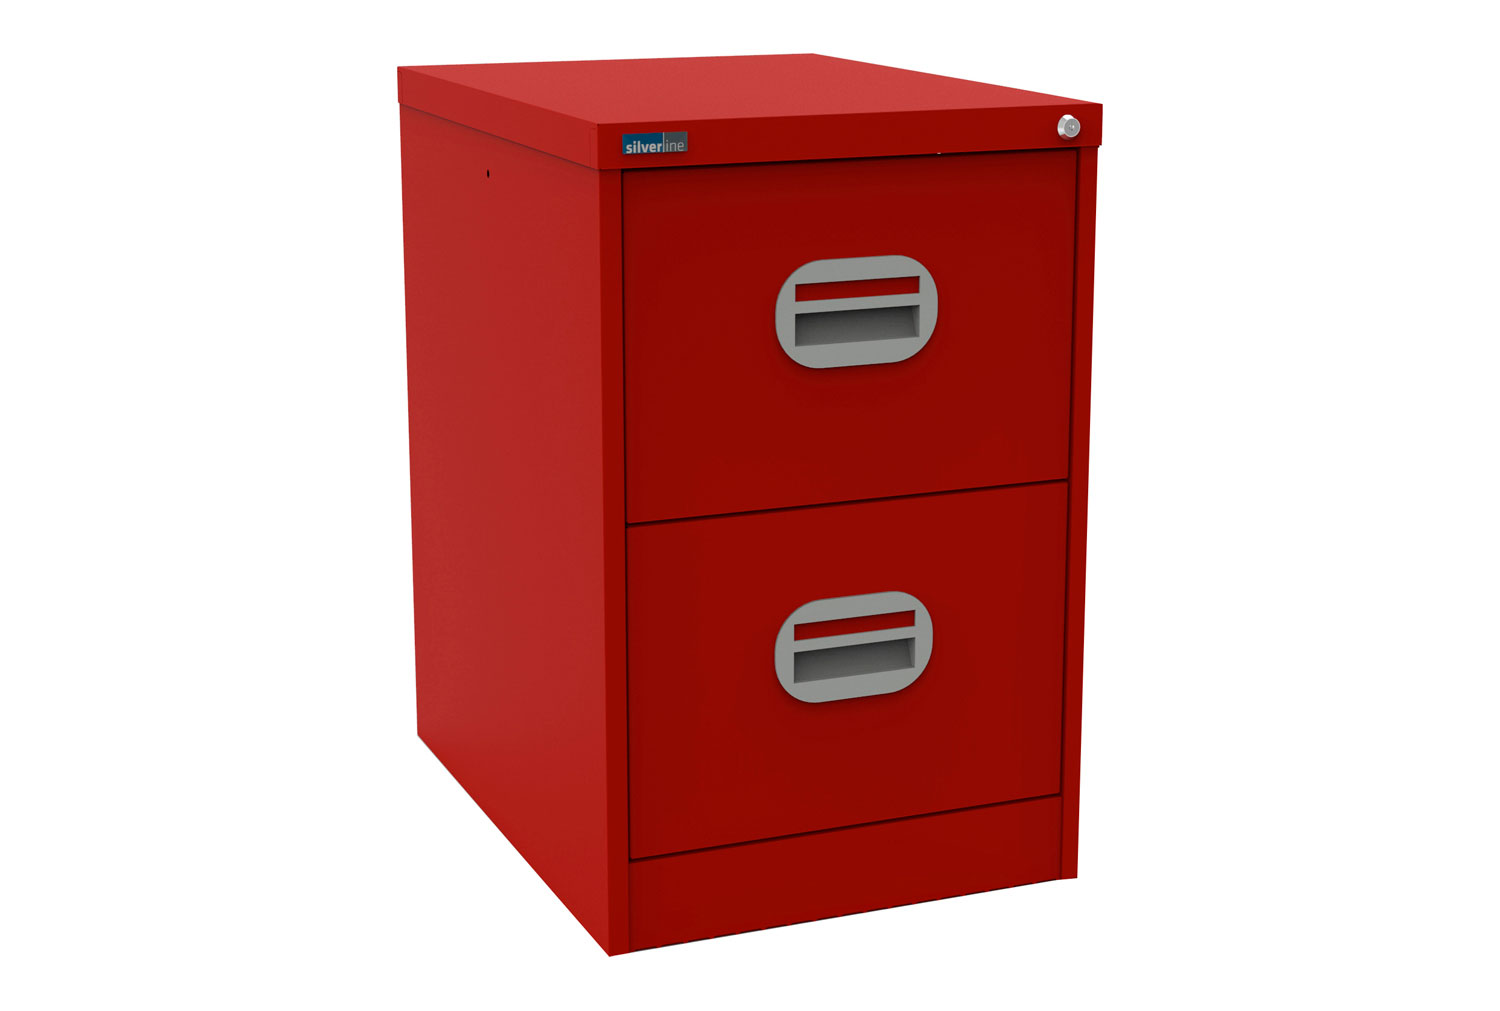 Silverline Kontrax 2 Drawer Filing Cabinet, 2 Drawer - 46wx62dx71h (cm), Red